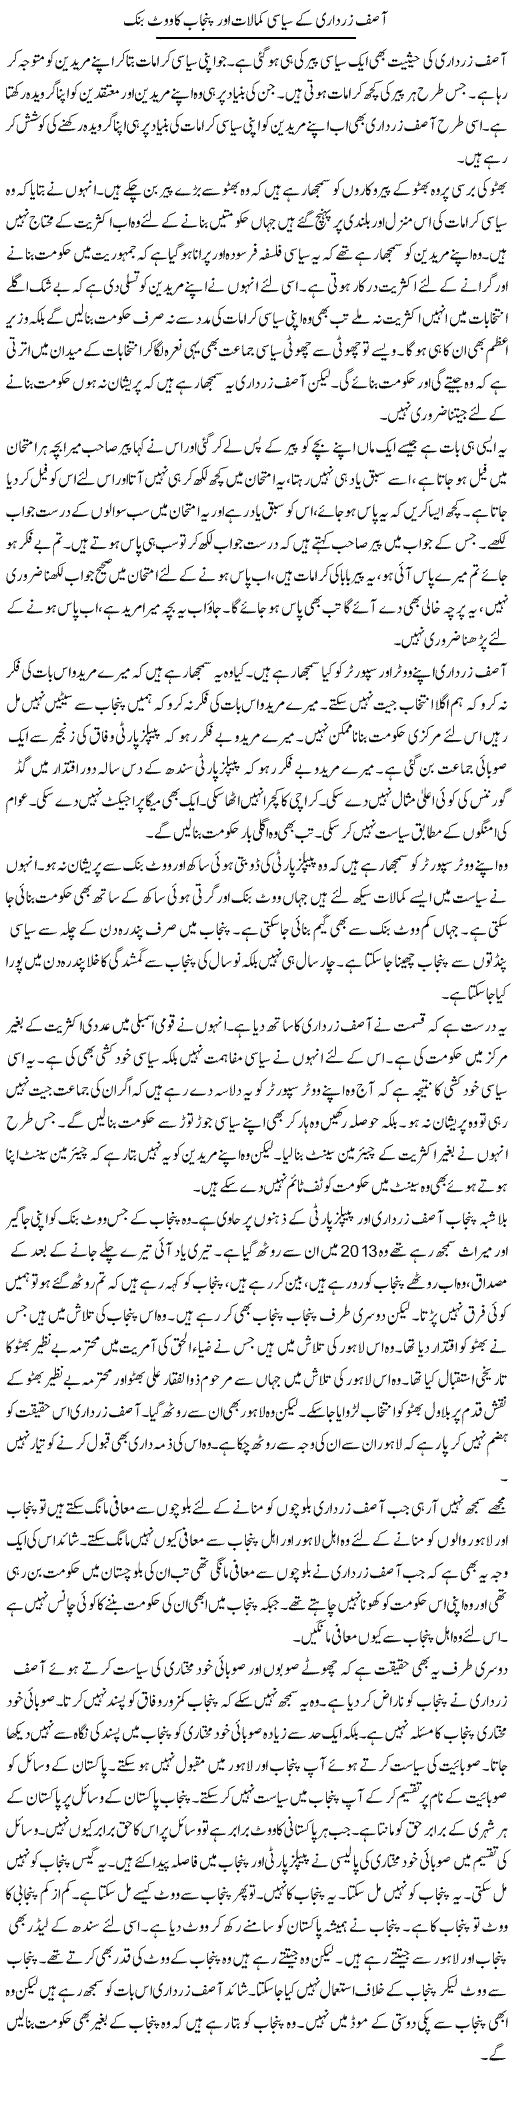 Asif Zardari Ke Siyasi Kamalaat Aur Punjab Ka Vote Bank | Muzamal Suharwardy | Daily Urdu Columns